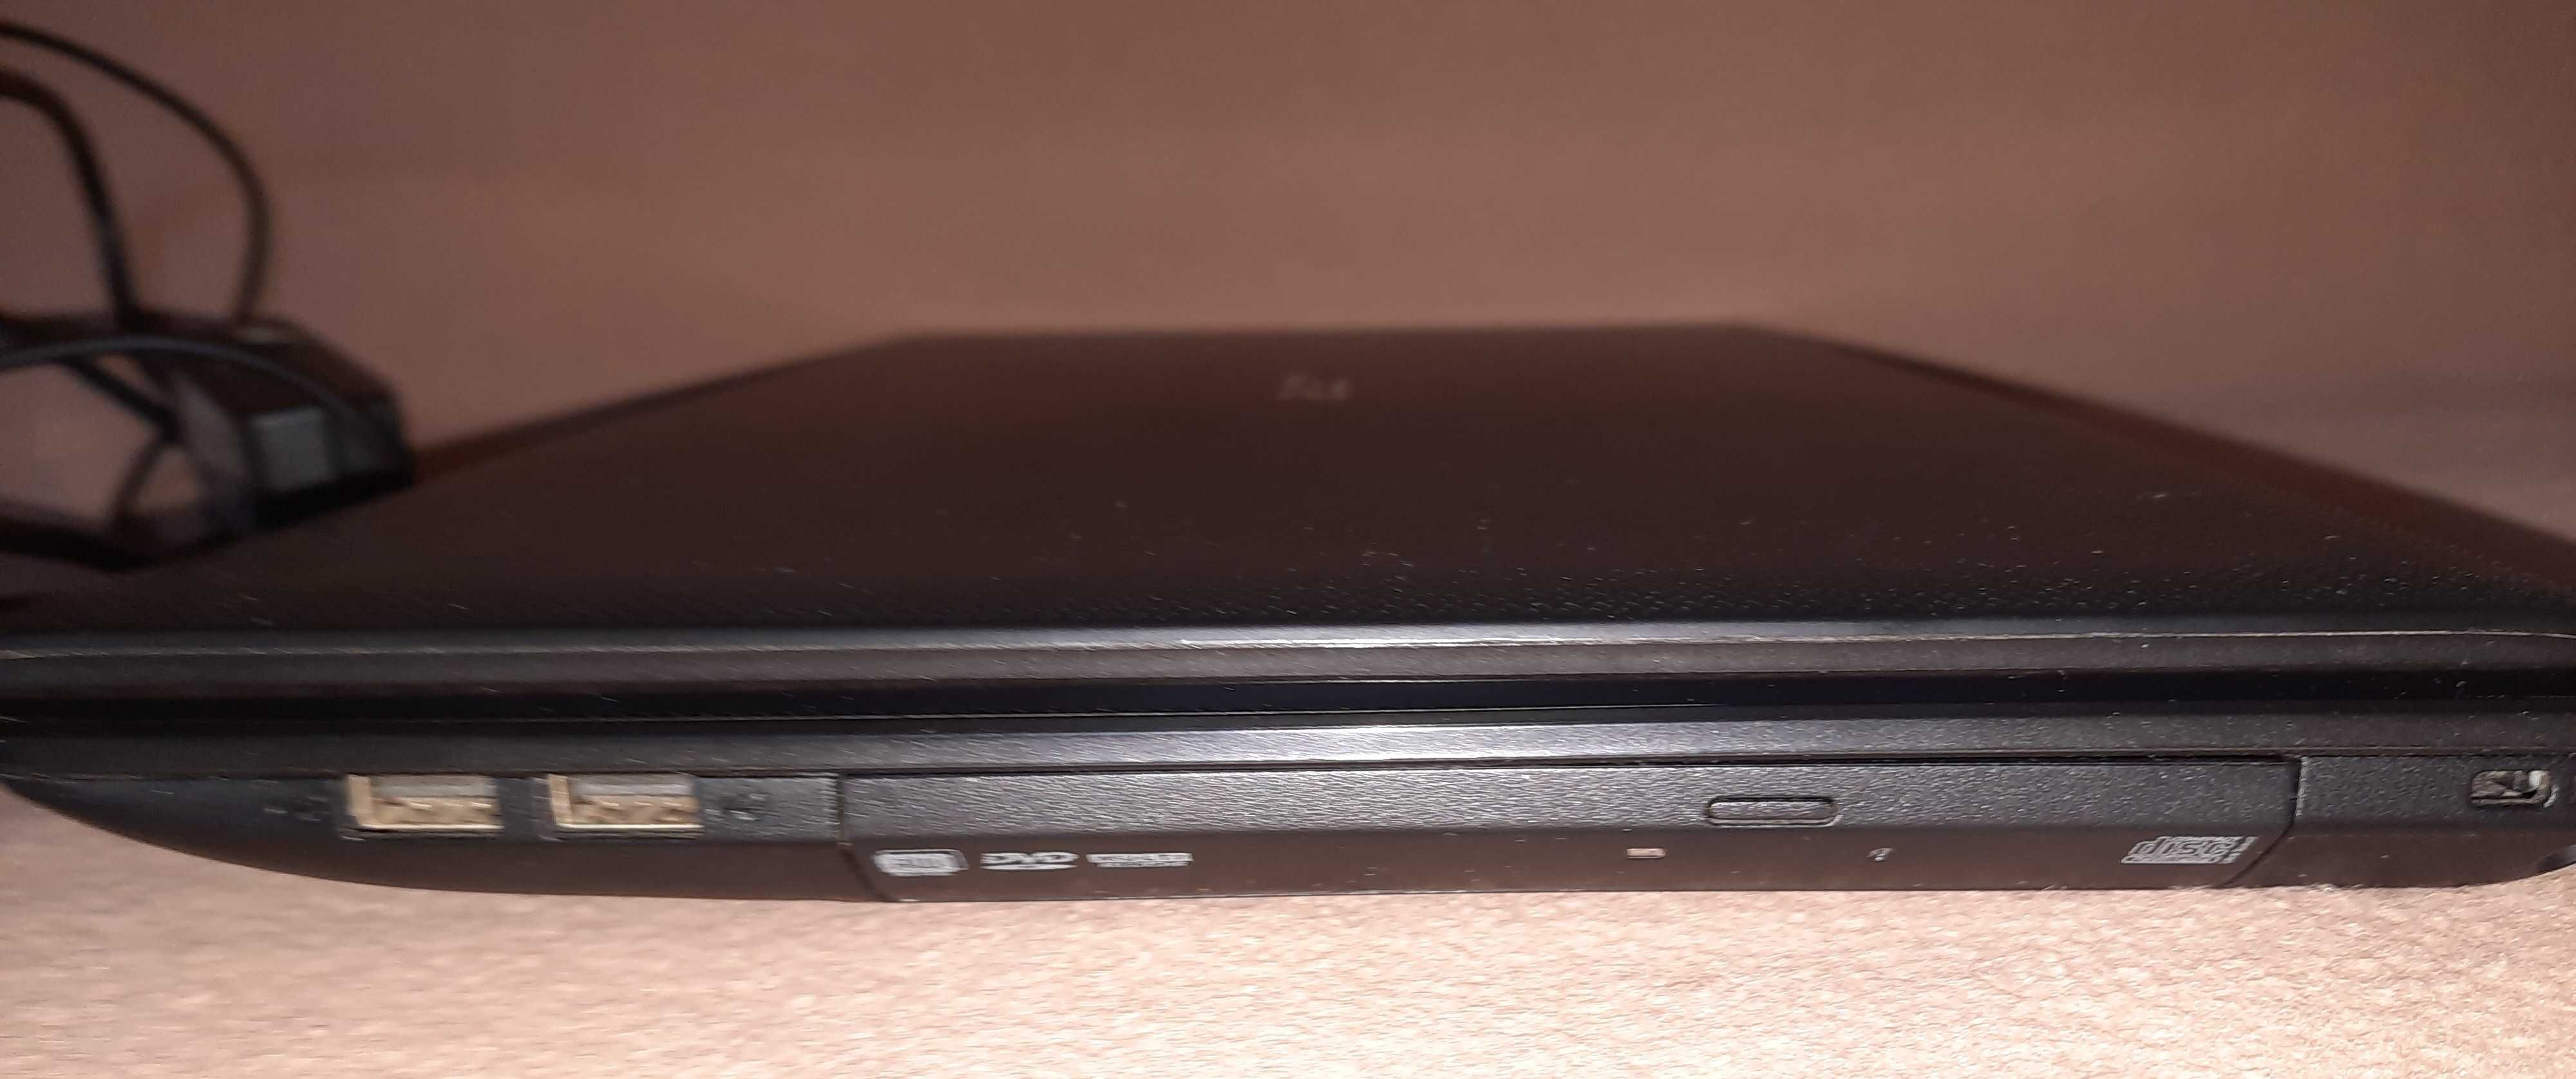 Laptop Acer 5742G